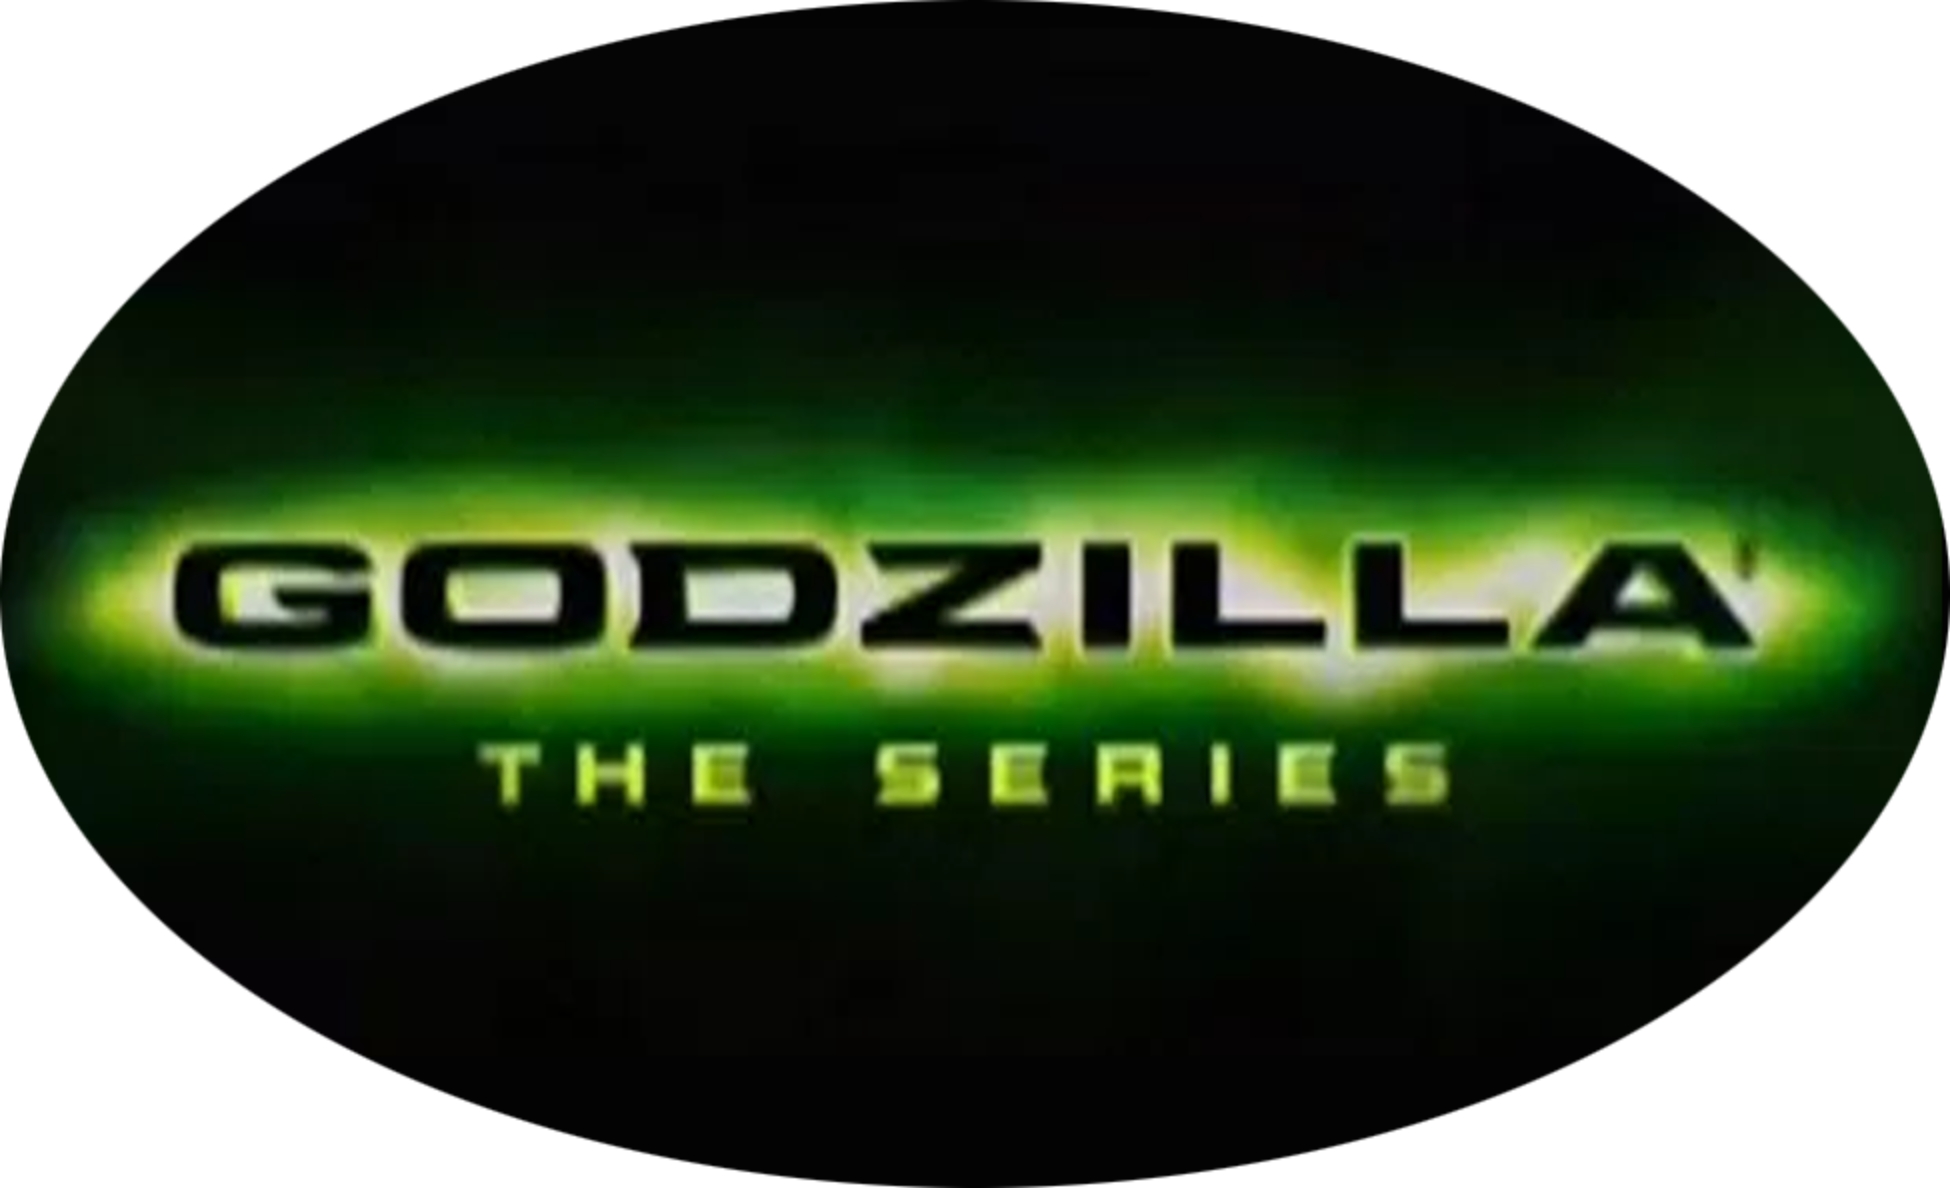 Godzilla The Animated Series 1998 (3 DVDs Box Set)